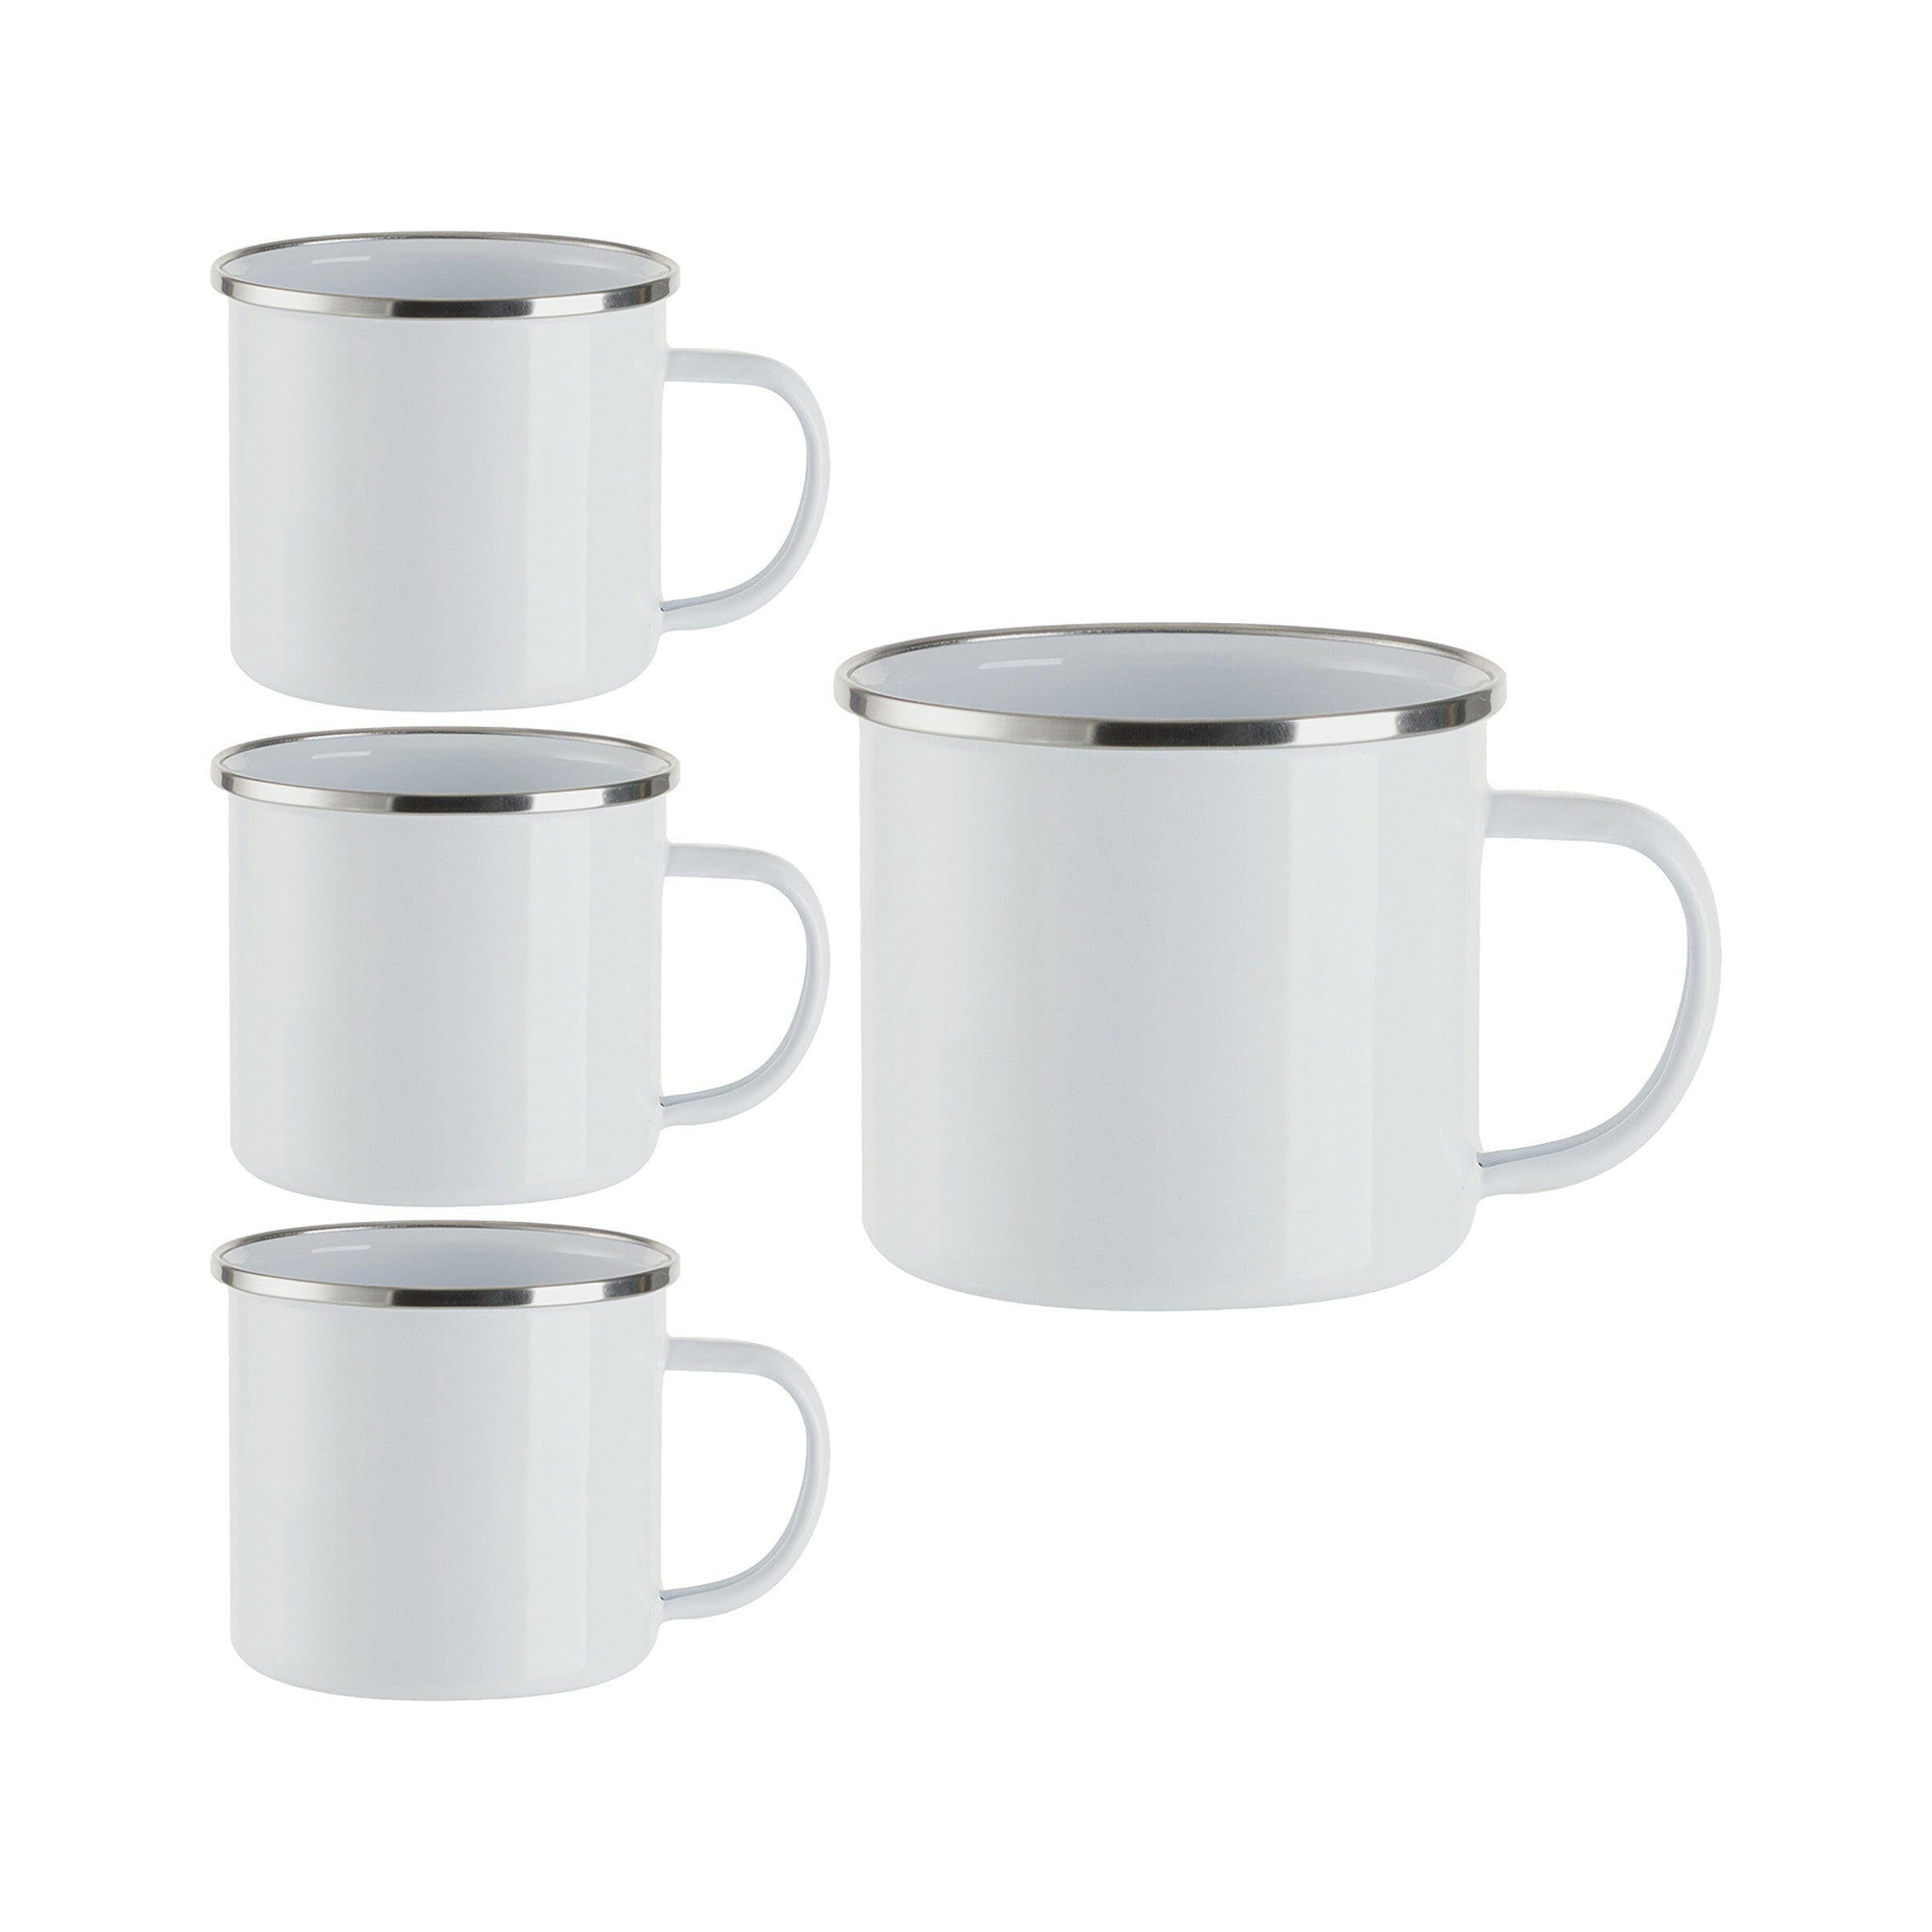 Blank Enamel Mug- Bulk 16oz Speckled Two Tone Enameled Steel Cup